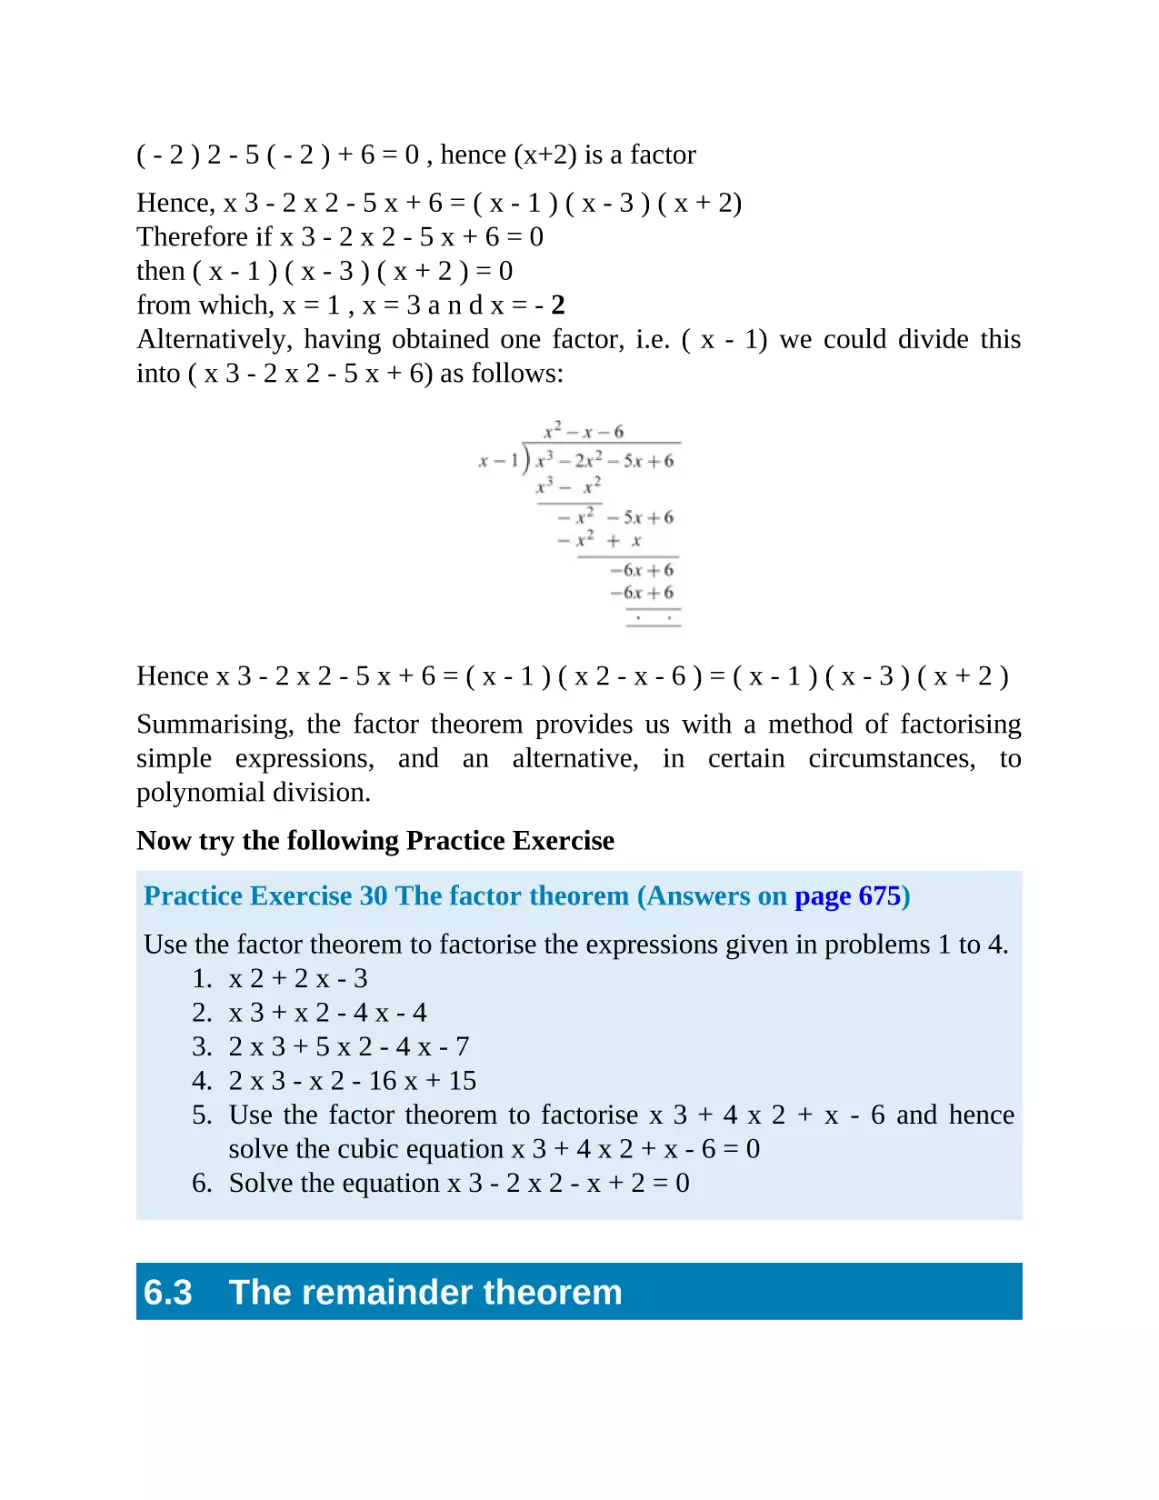 6.3 The remainder theorem